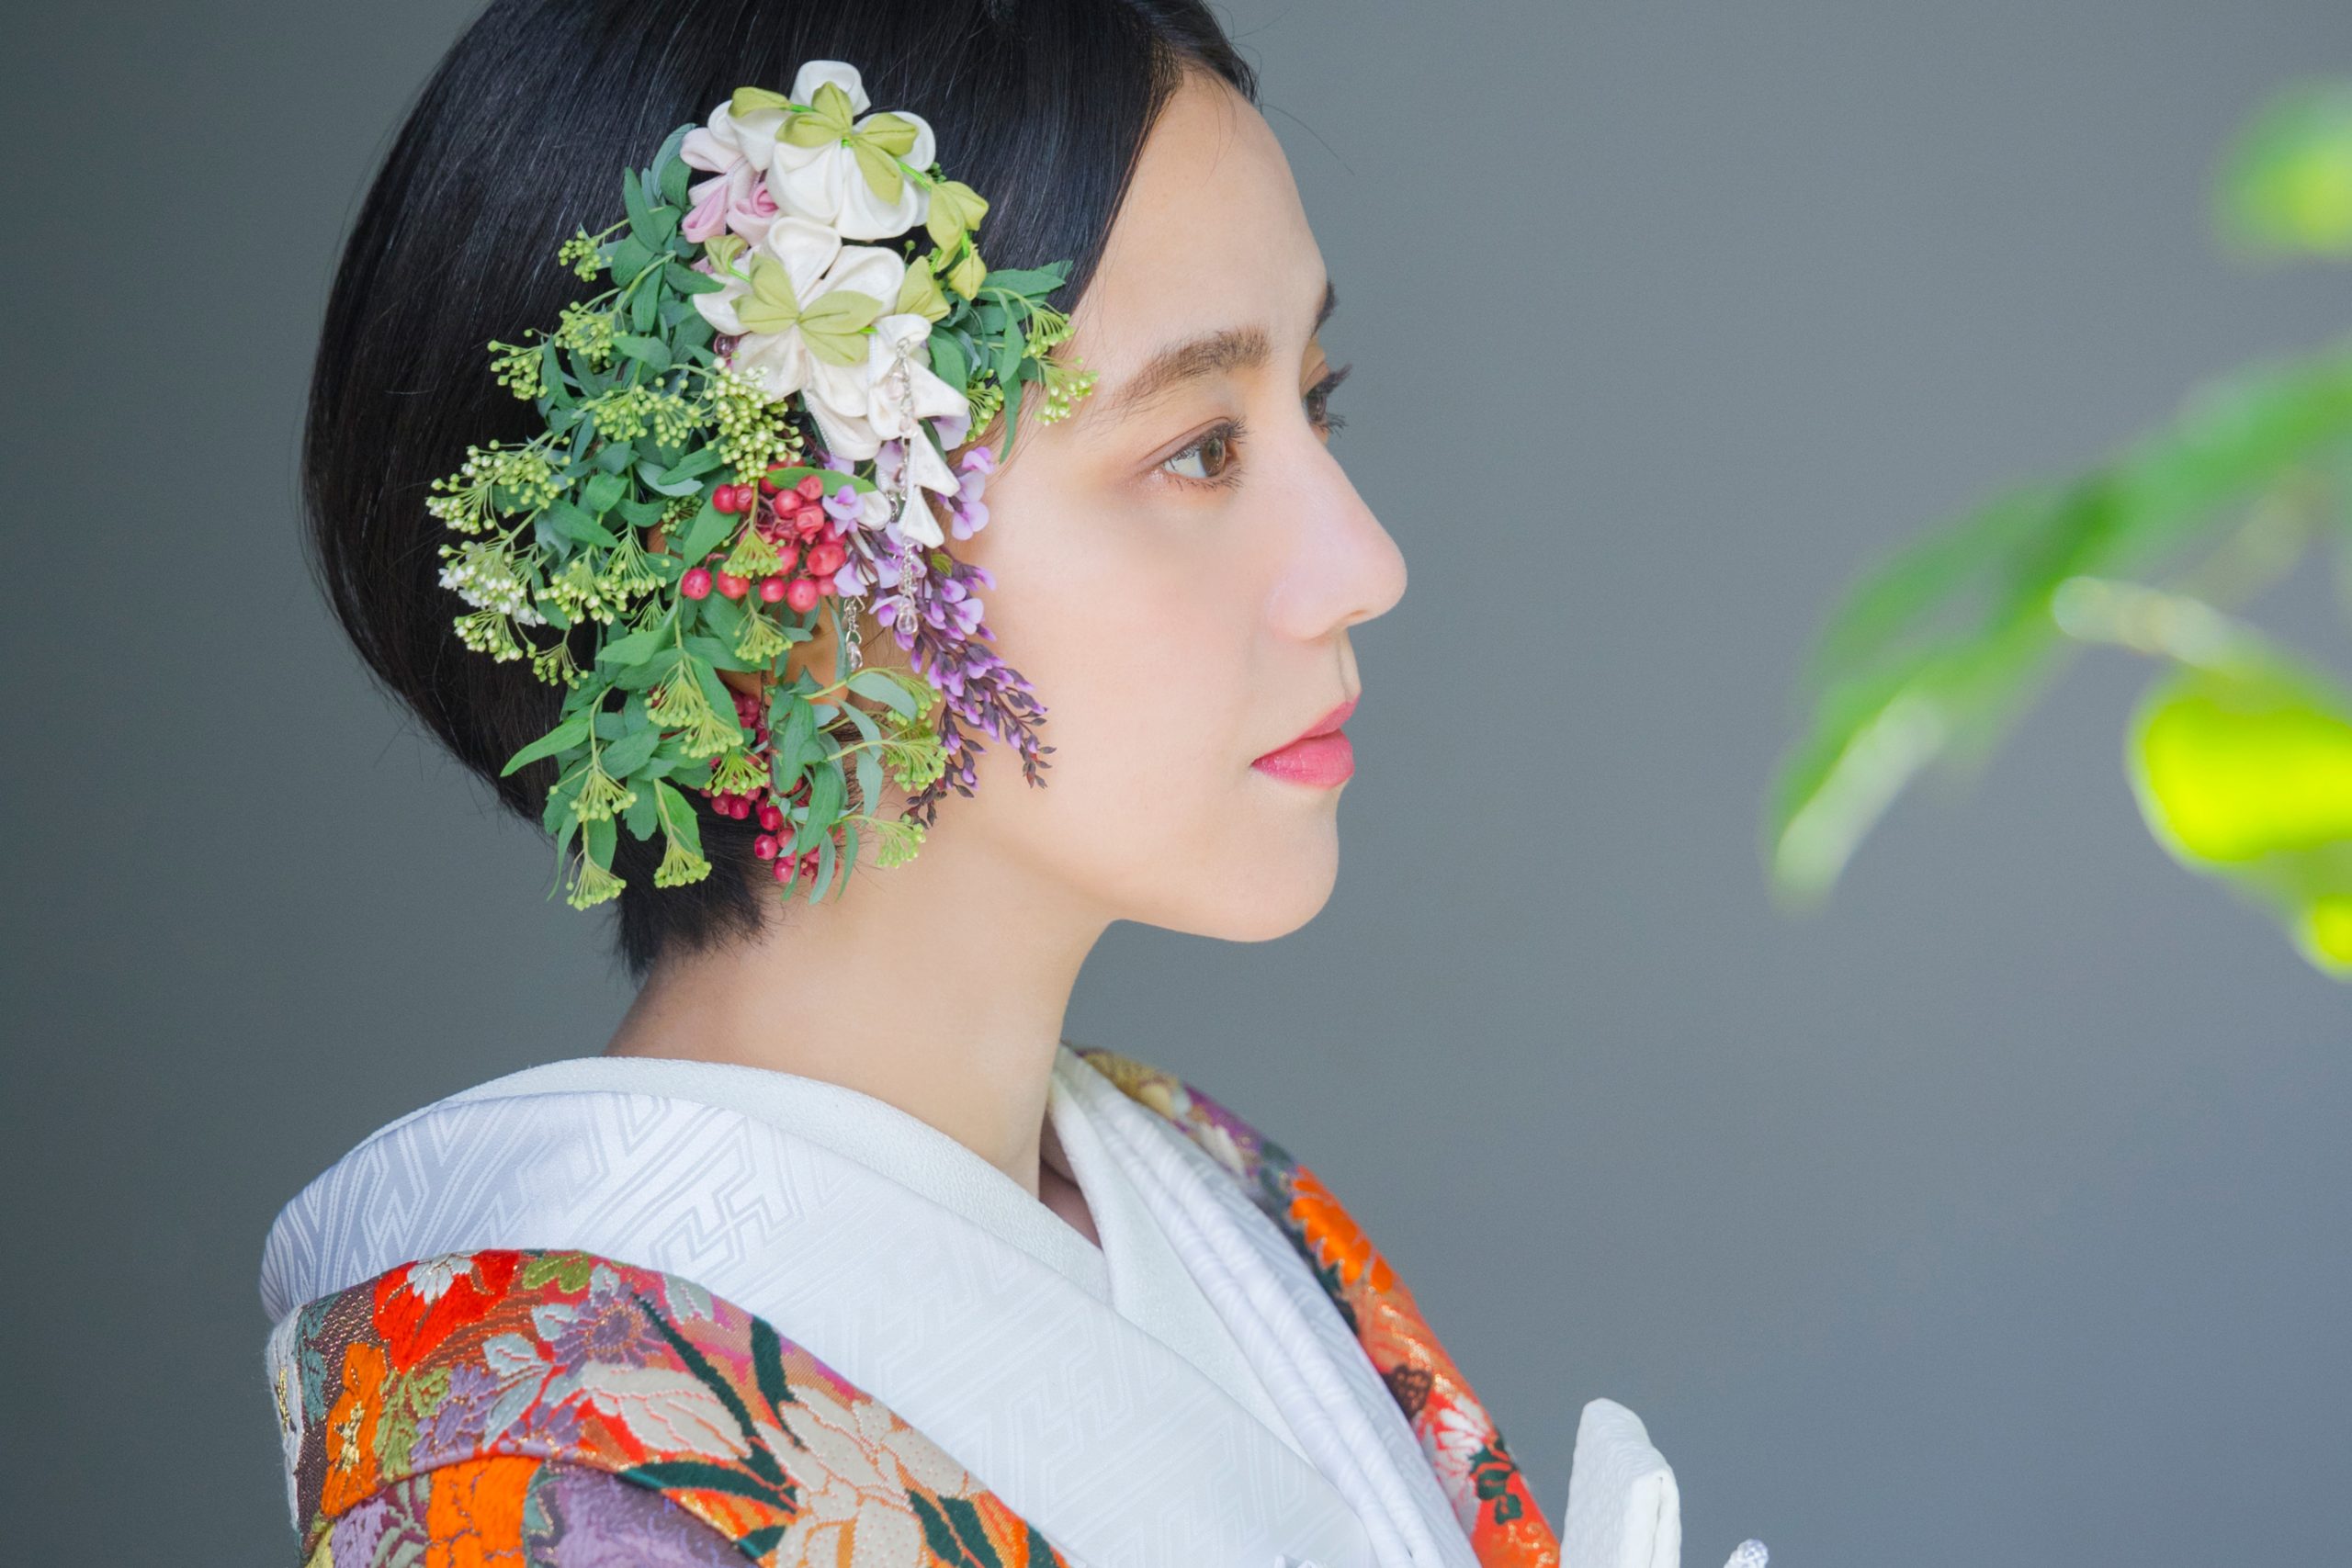 BLENDAの婚礼和装は、クラシカル。
白無垢、色打掛、引き振袖も「古典やアンティーク」のものにこだわって、少しずつコレクションしています。
洗い張りやお直しをして、お着物に新たな息吹を吹き込み、大切に大切にしています。
なぜなら、過去数十年、また百年近くも大切に受け継がれた日本の伝統美や意匠は、今では真似の出来ない貴重なもの。
ぜひ日本の伝統美である「花嫁姿」を一度纏ってみてください。
